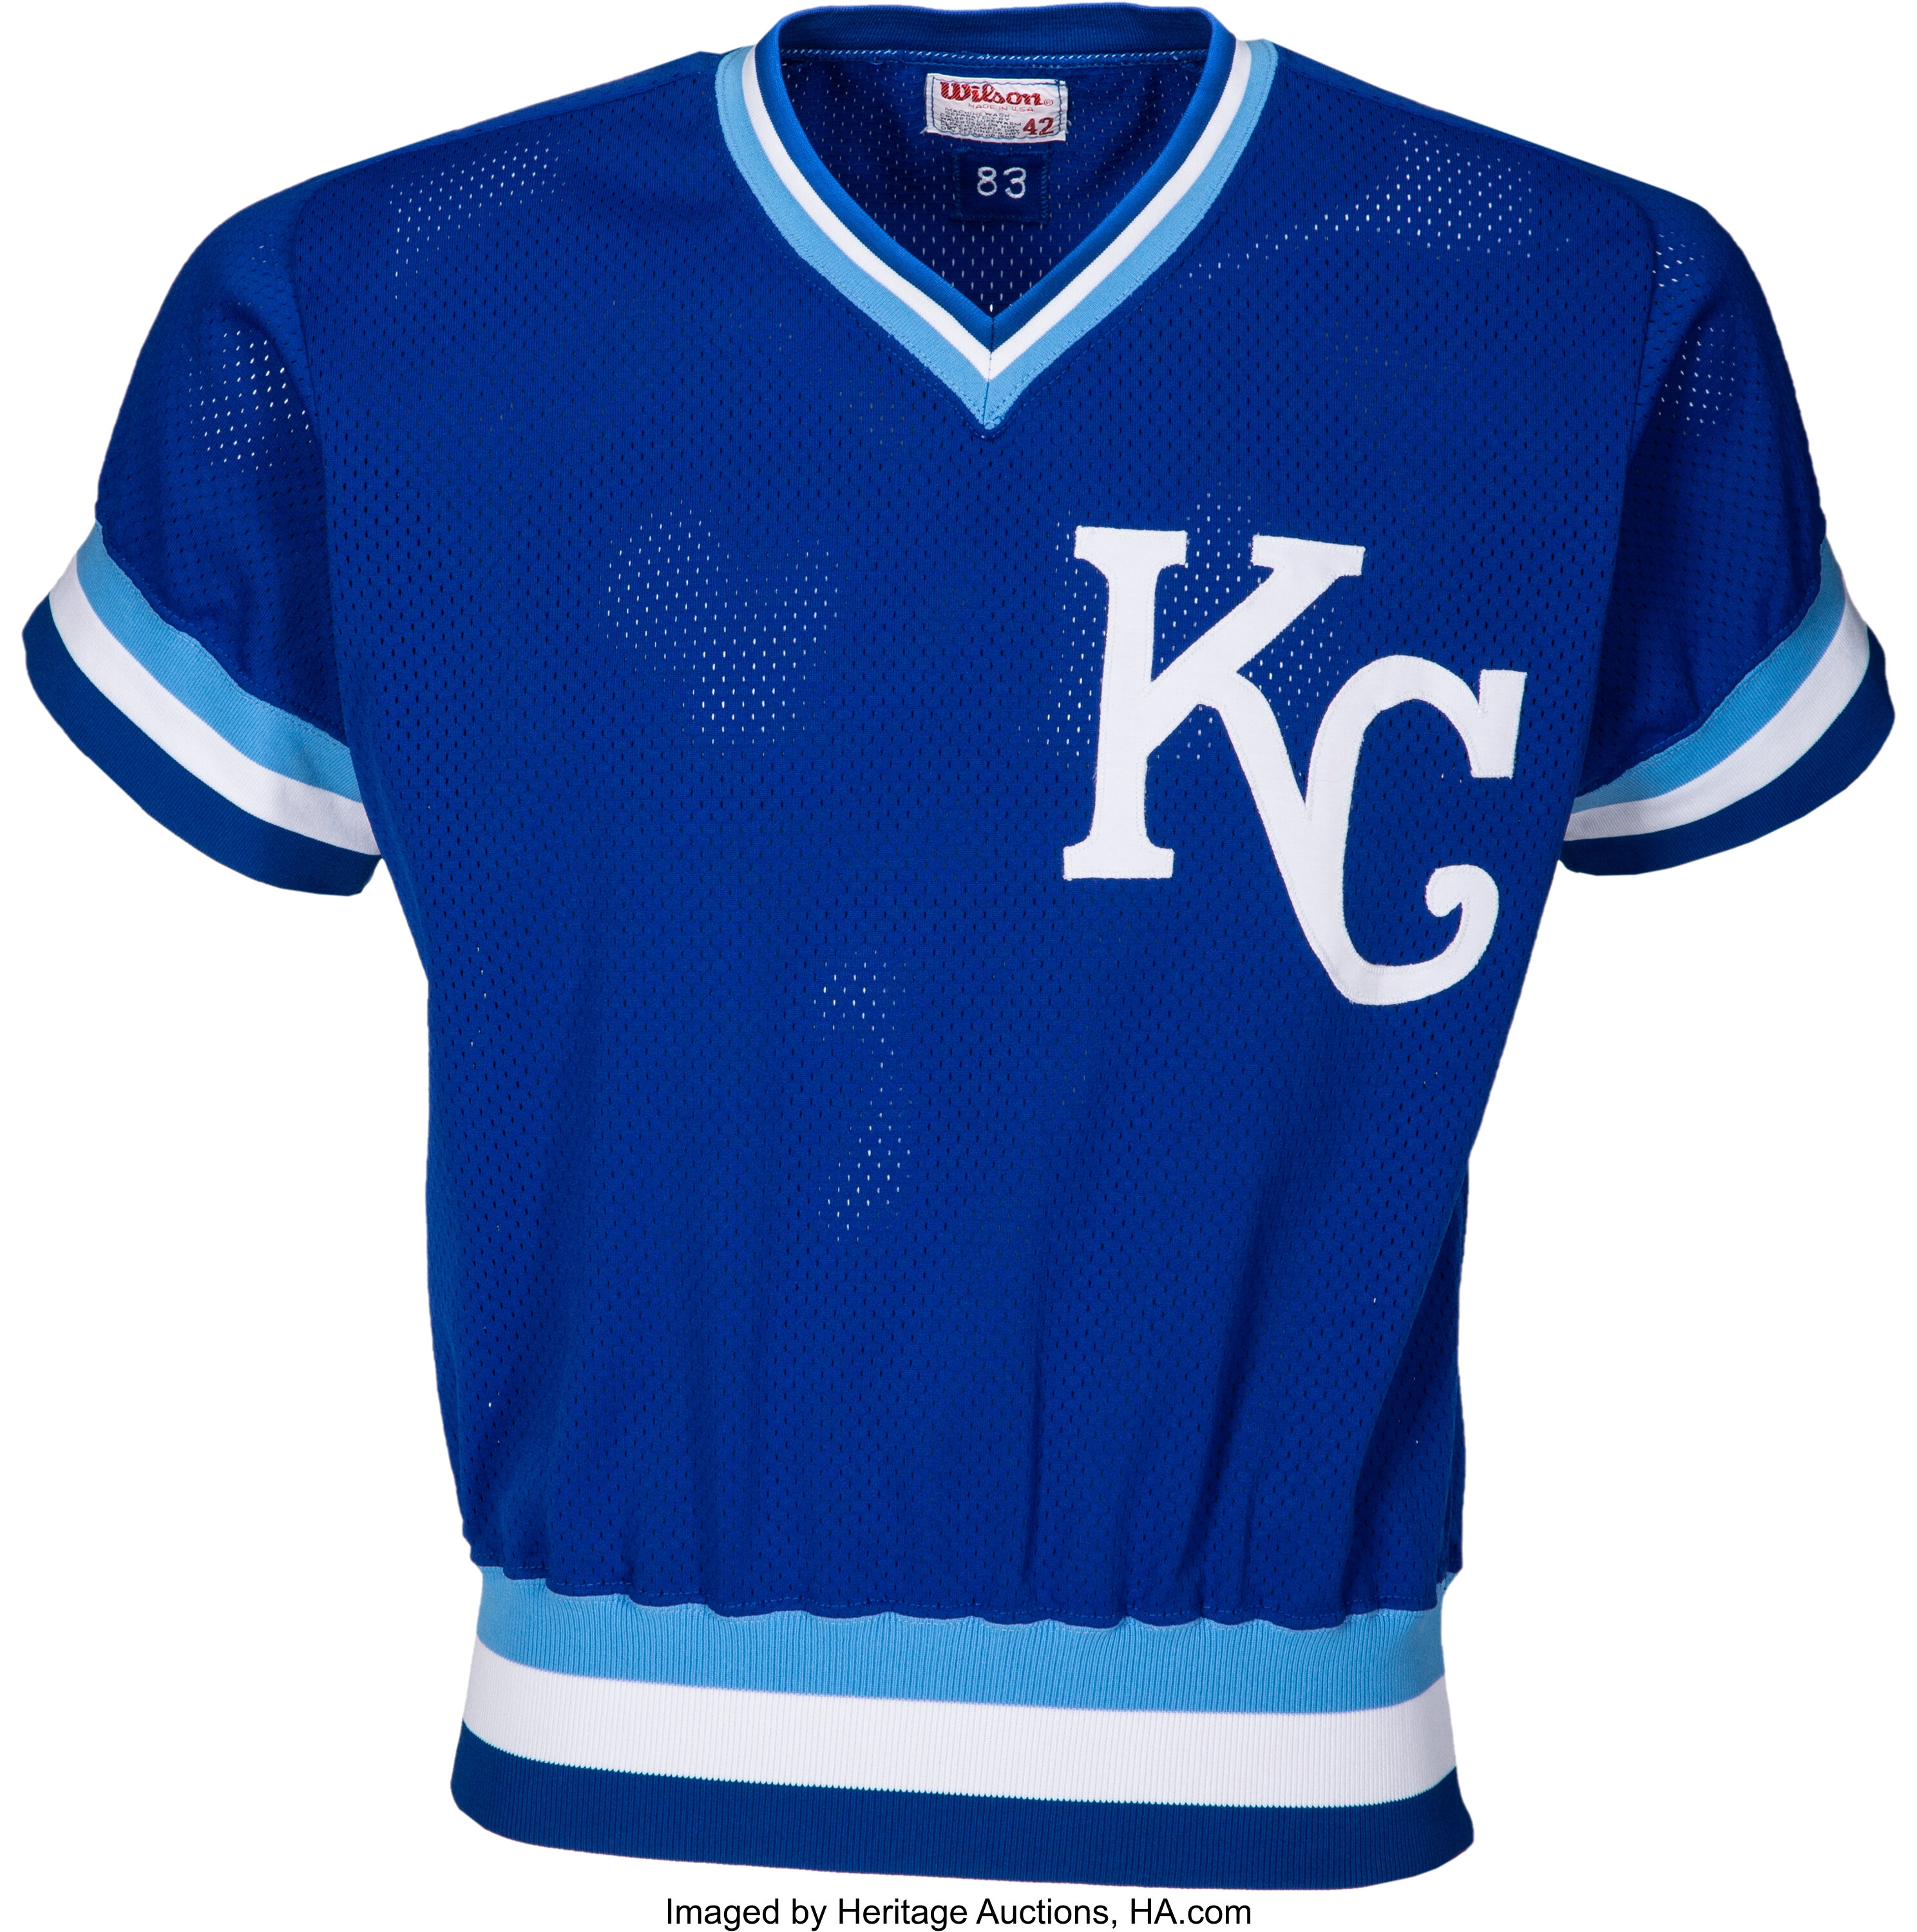 Royals showcase power-blue uniforms with George Brett